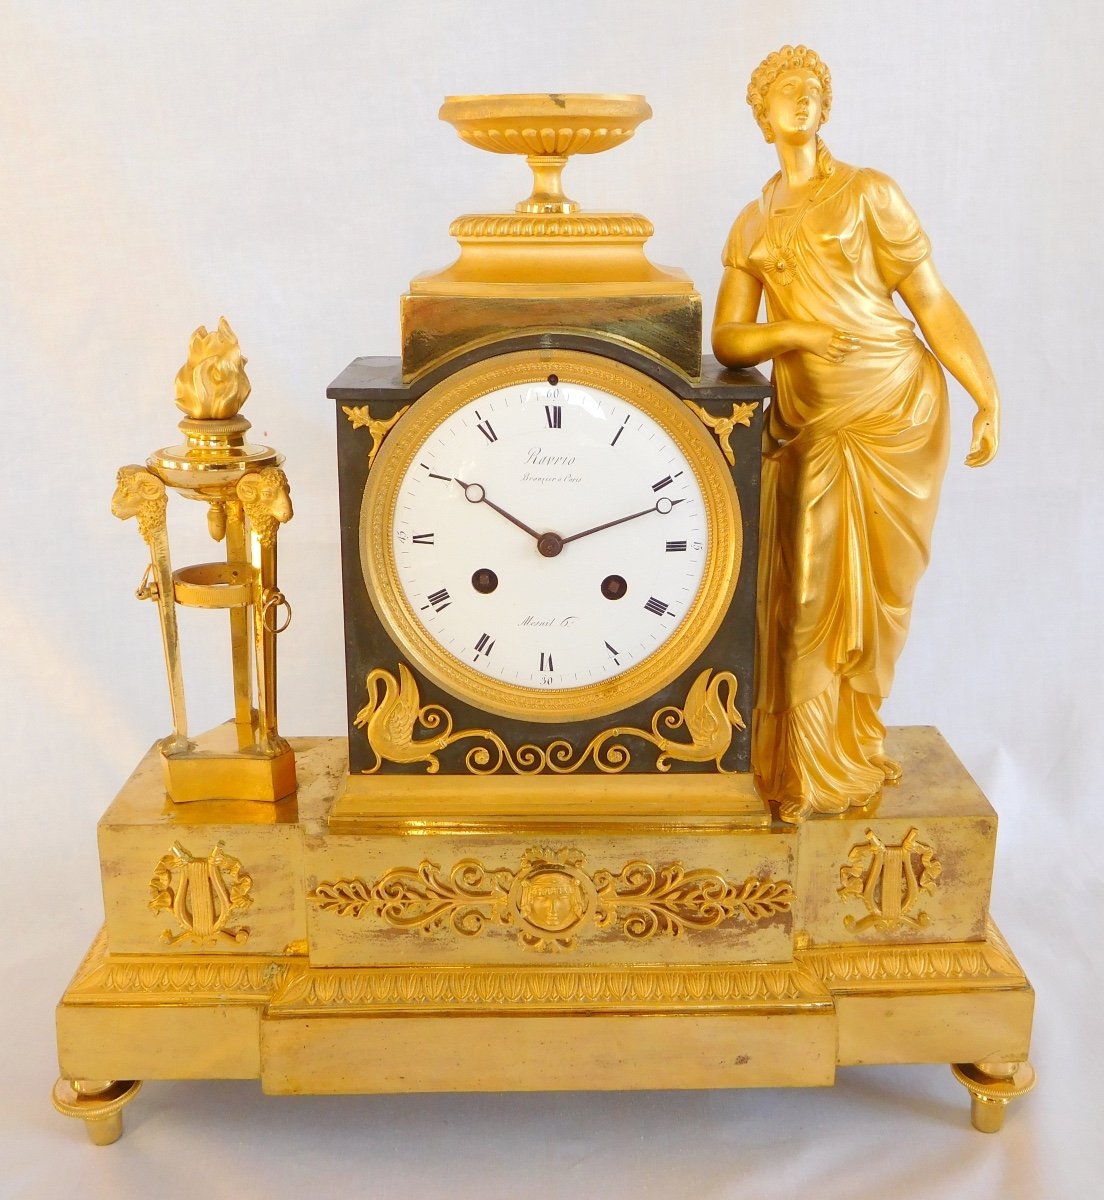 Ravrio & Mesnil : Empire Ormolu Clock, Mercury Gilt, Early 19th Century - Signed